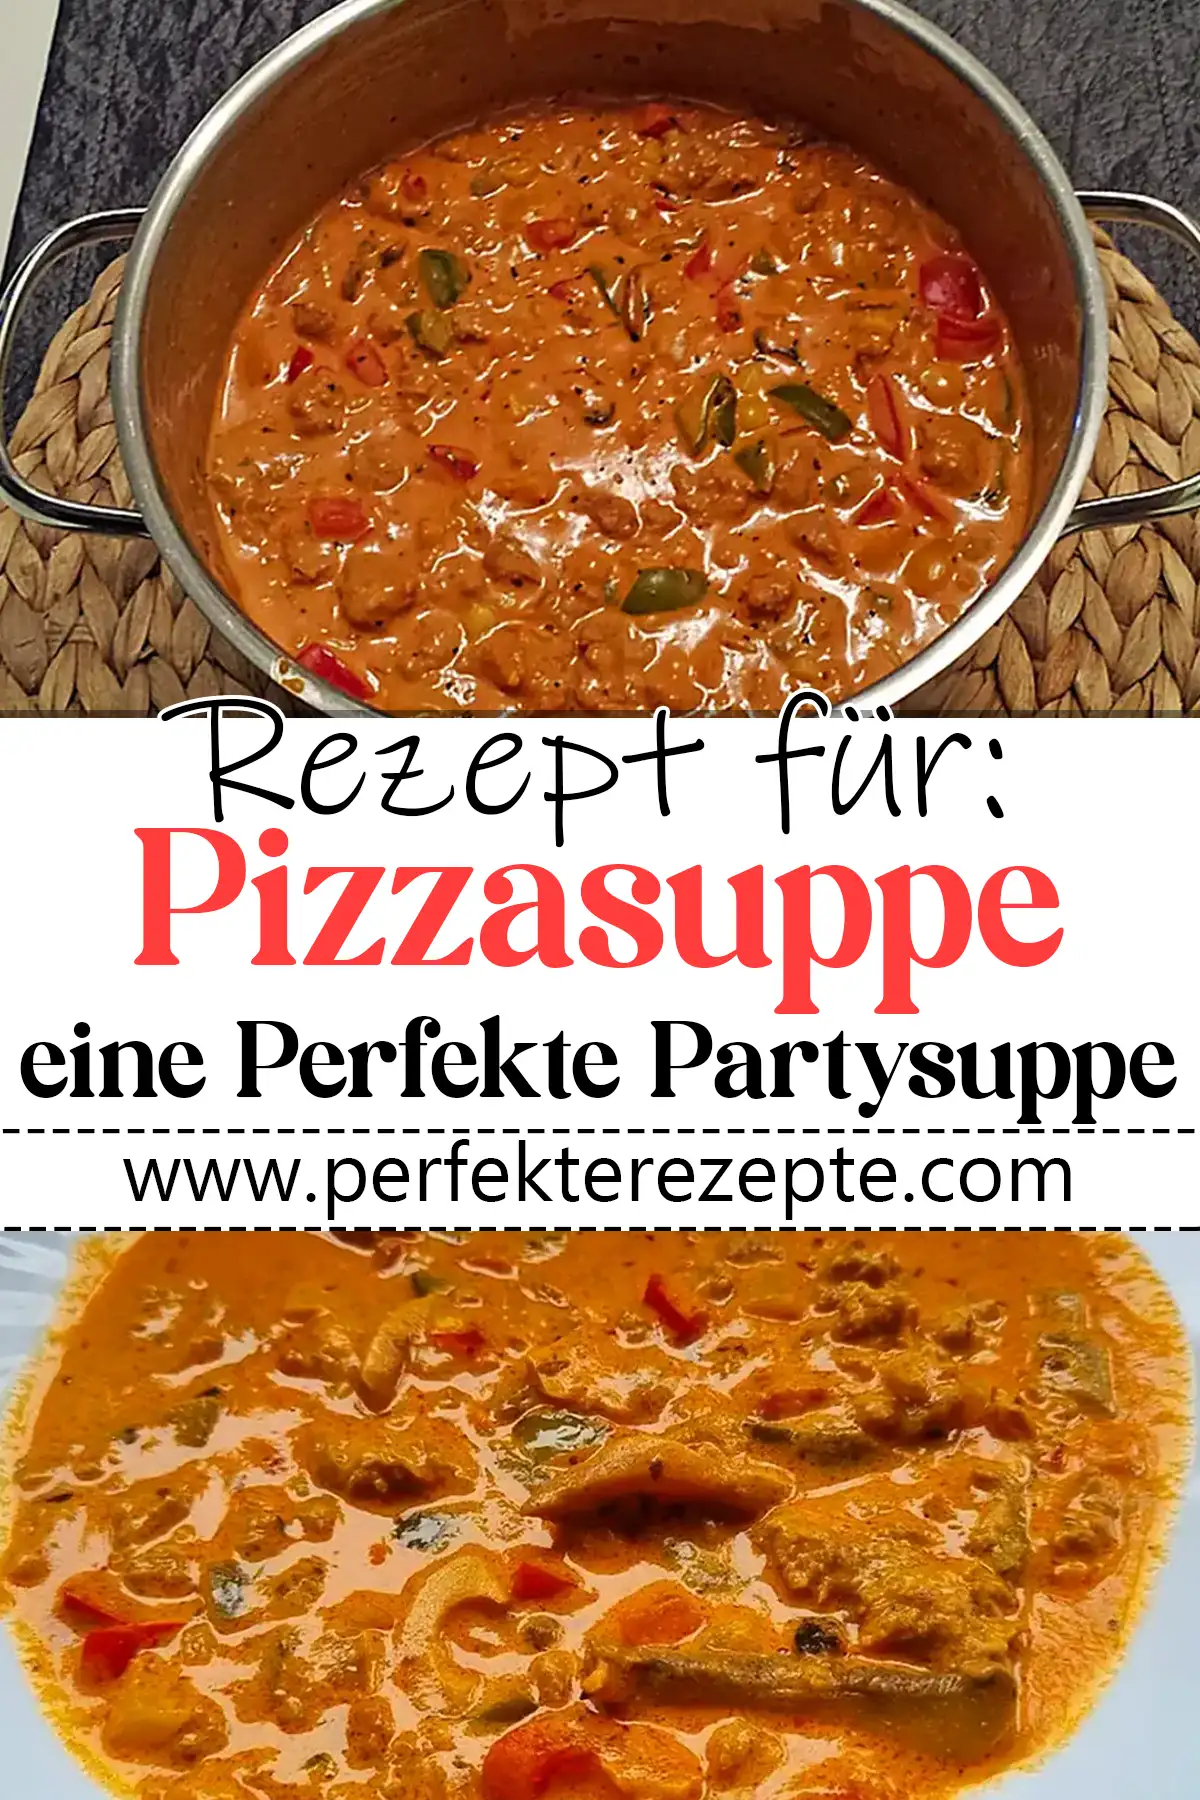 Pizzasuppe Rezept: eine Perfekte Partysuppe